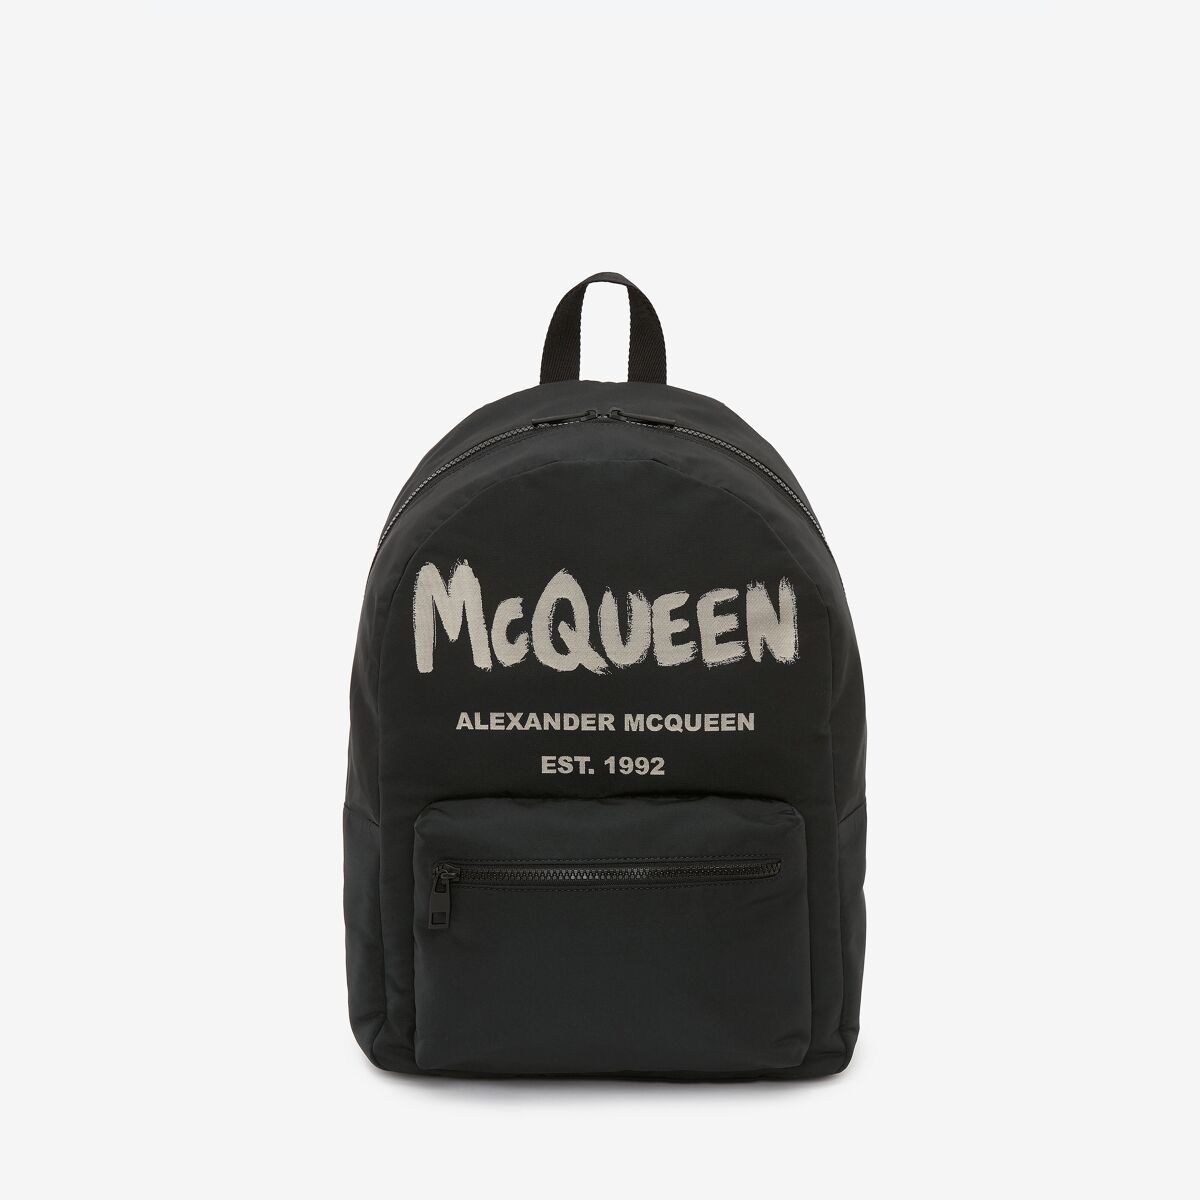 ALEXANDER MCQUEEN McQueen Graffiti Metropolitan Backpack